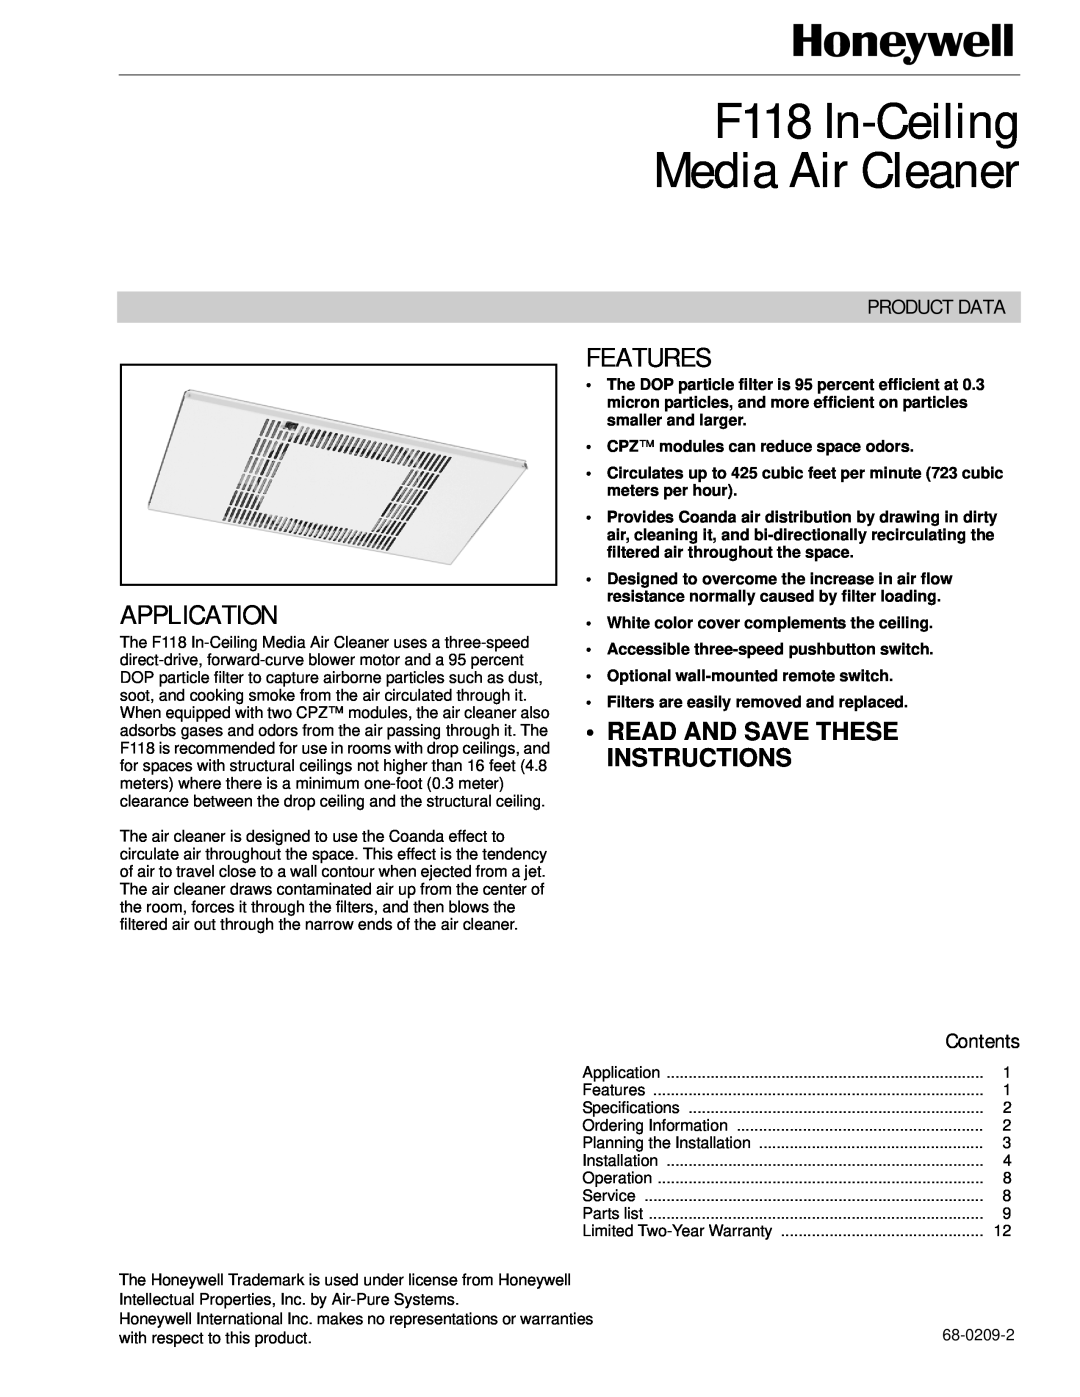 Honeywell specifications F118 In-CeilingMedia Air Cleaner, Application, Specifications, Features, Specification Data 